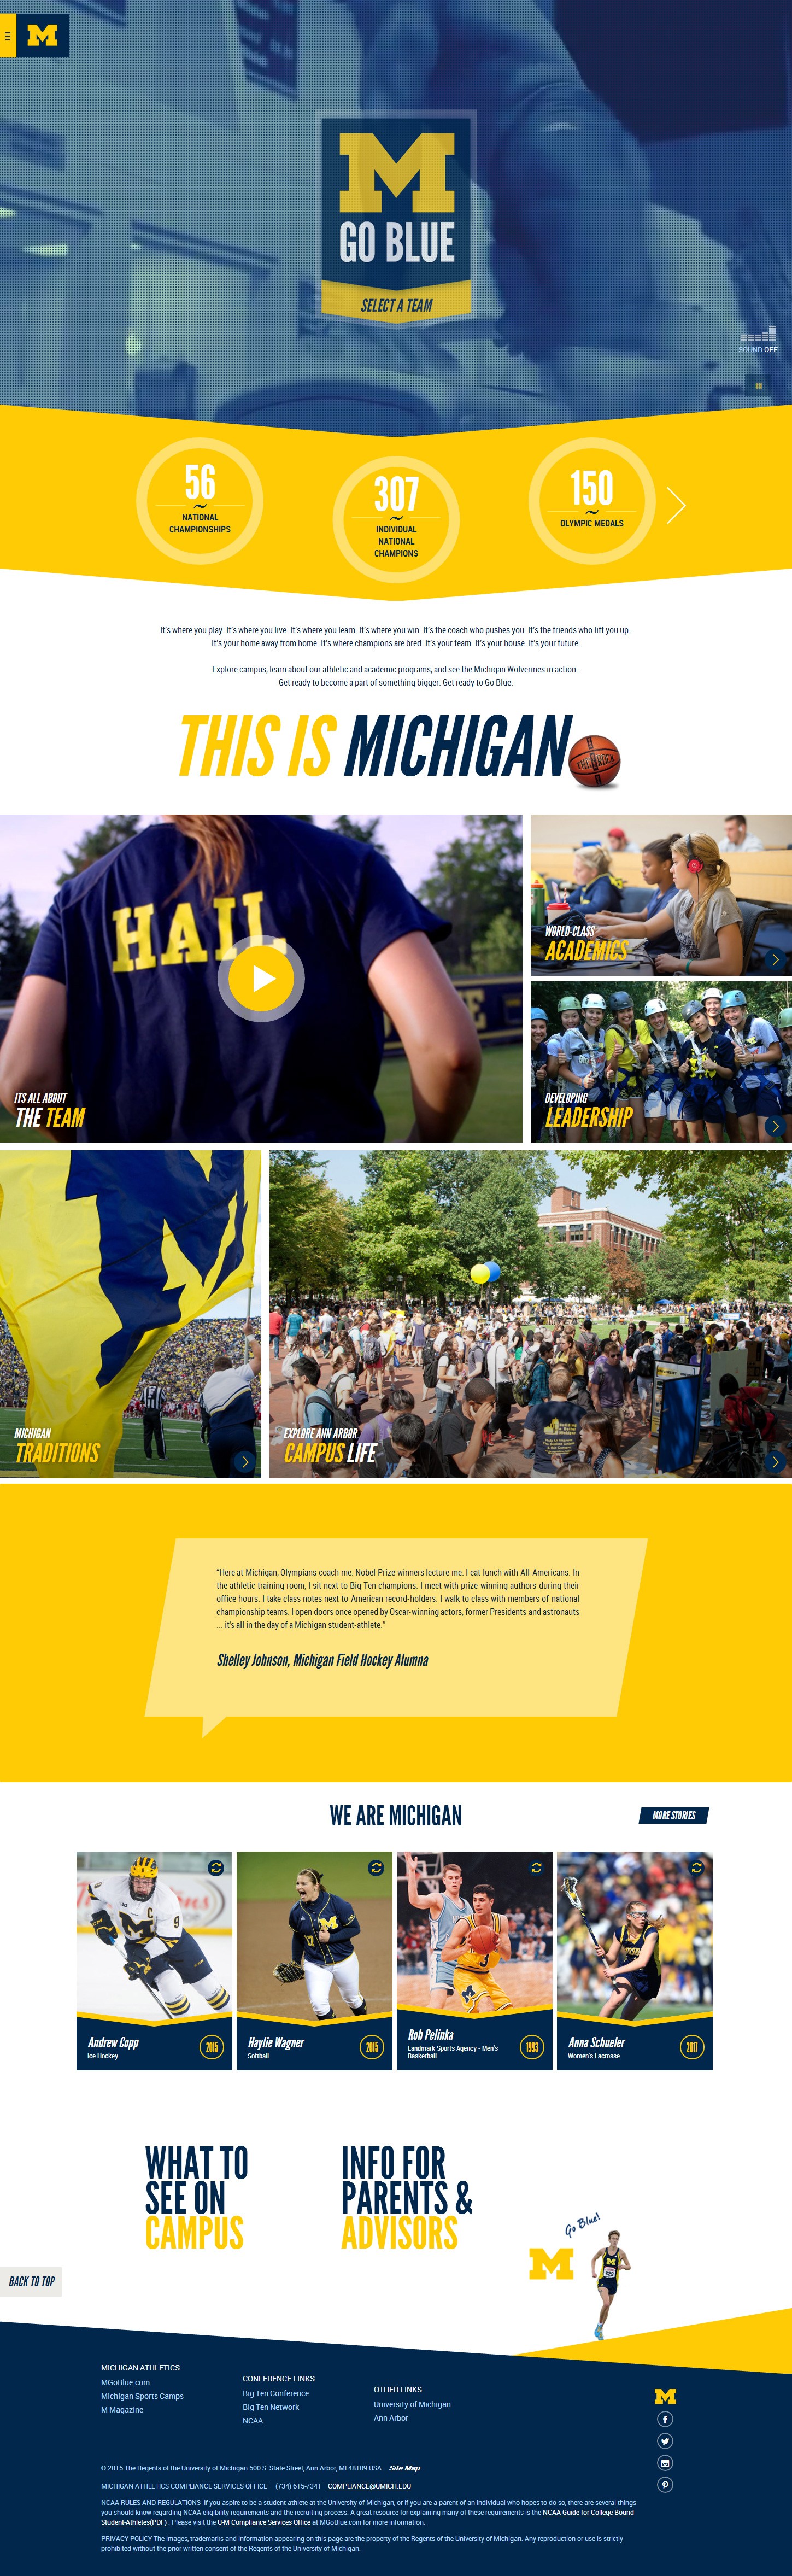 This-is-Michigan---University-of-Michigan-Athletic